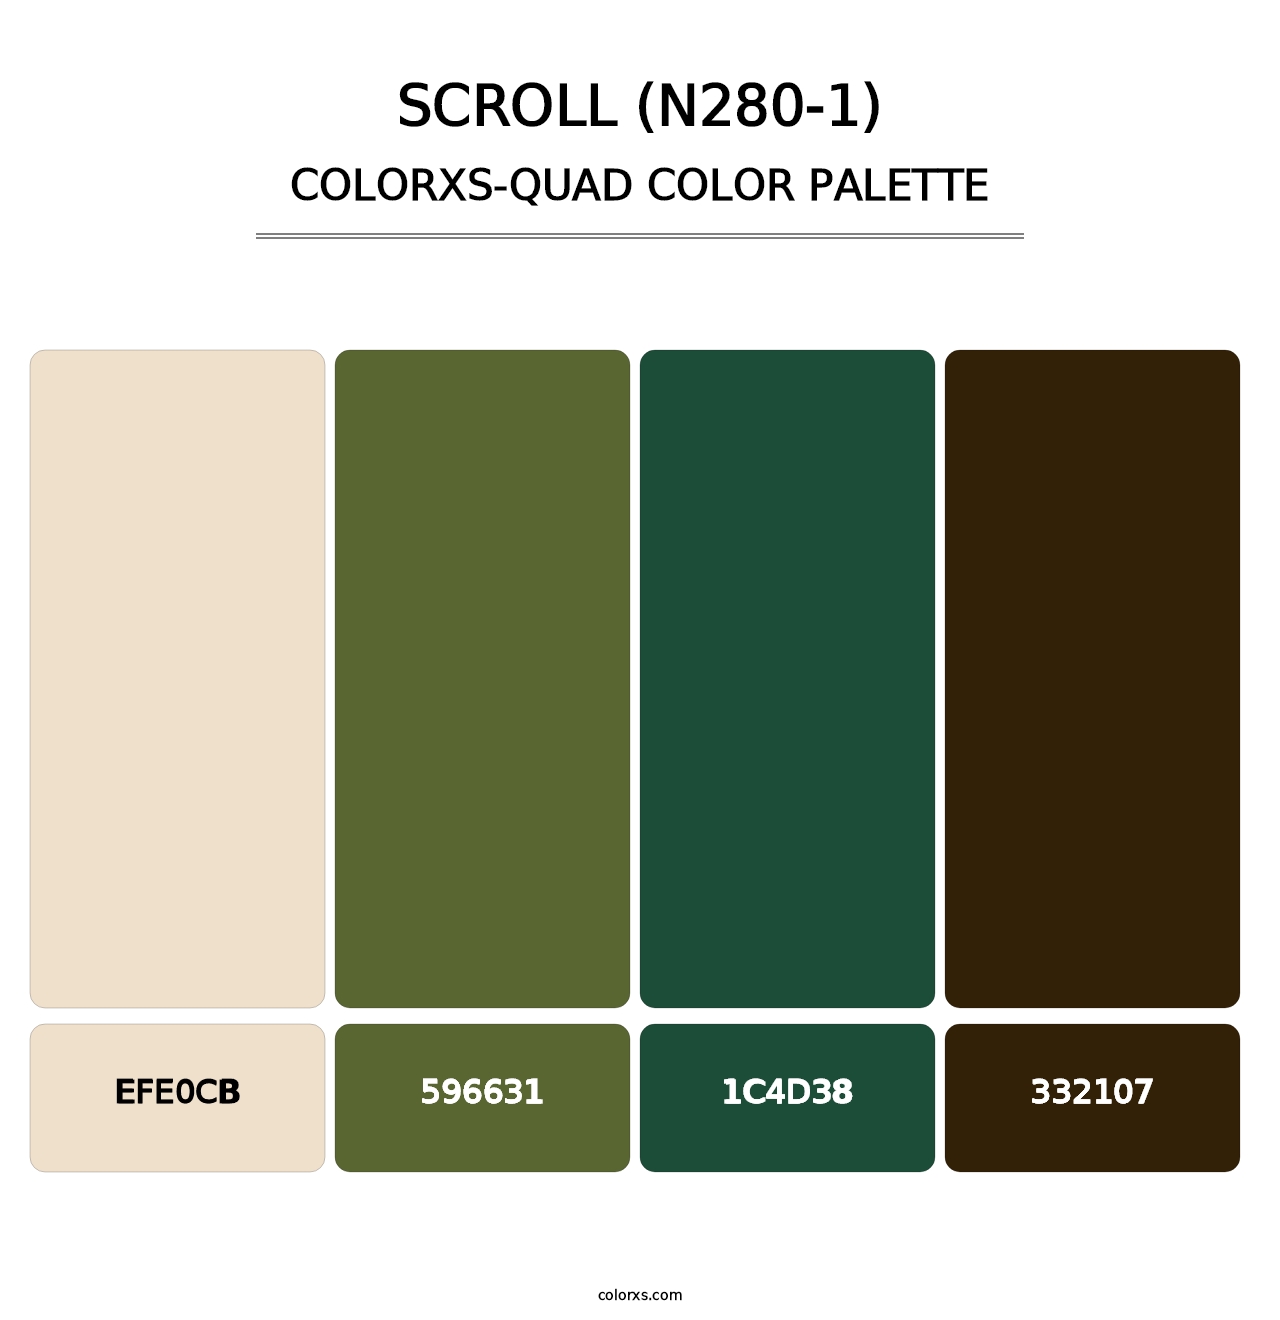 Scroll (N280-1) - Colorxs Quad Palette